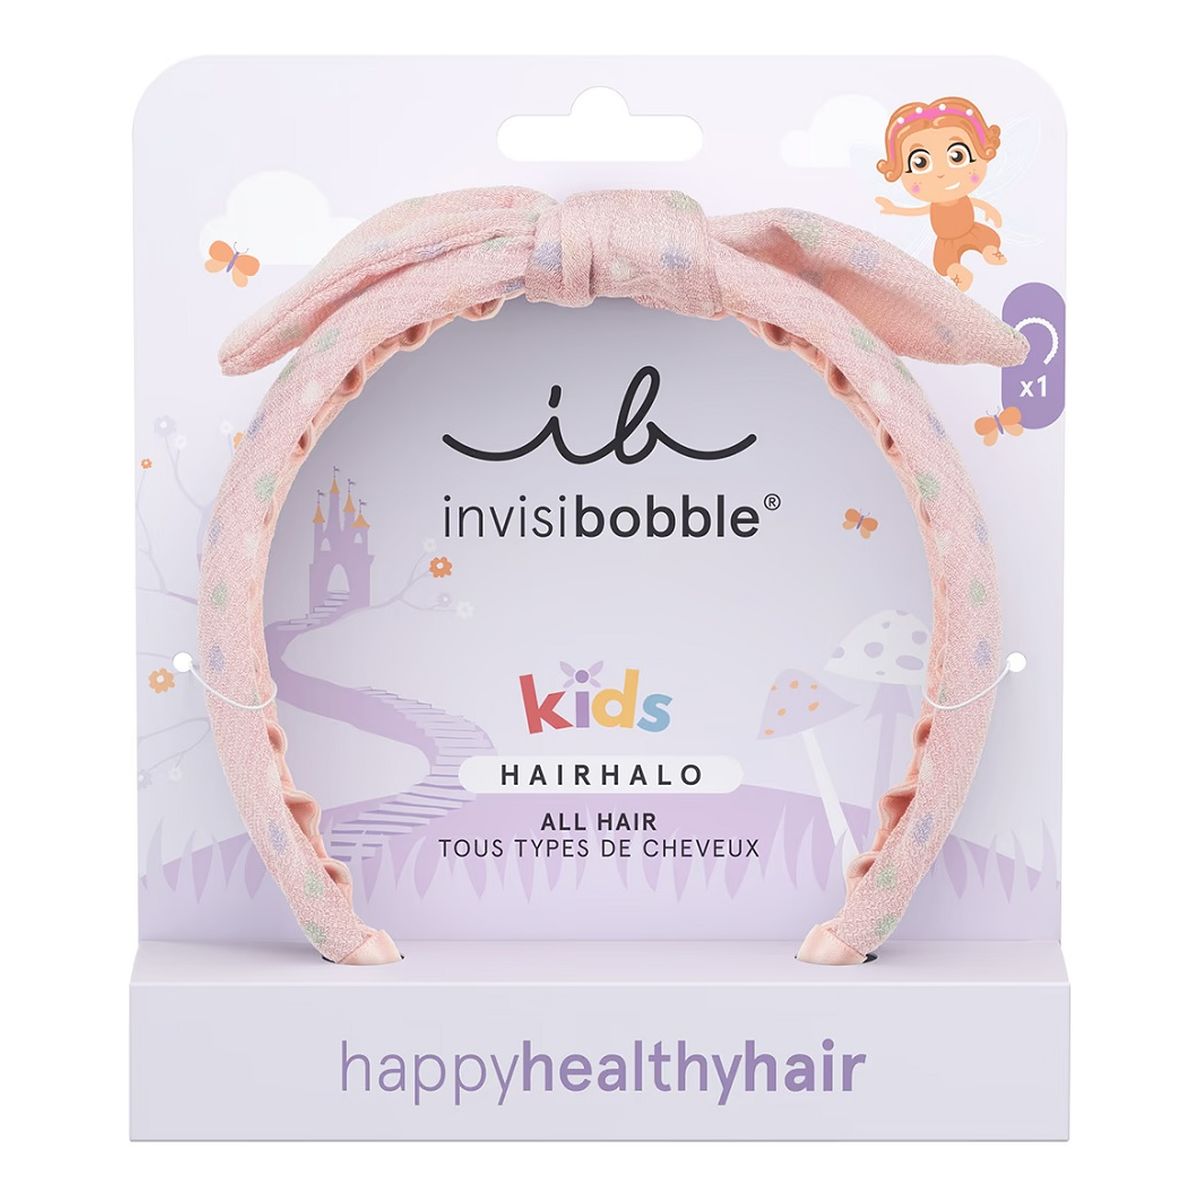 Invisibobble Kids hairhalo regulowana opaska do włosów you are a sweetheart!